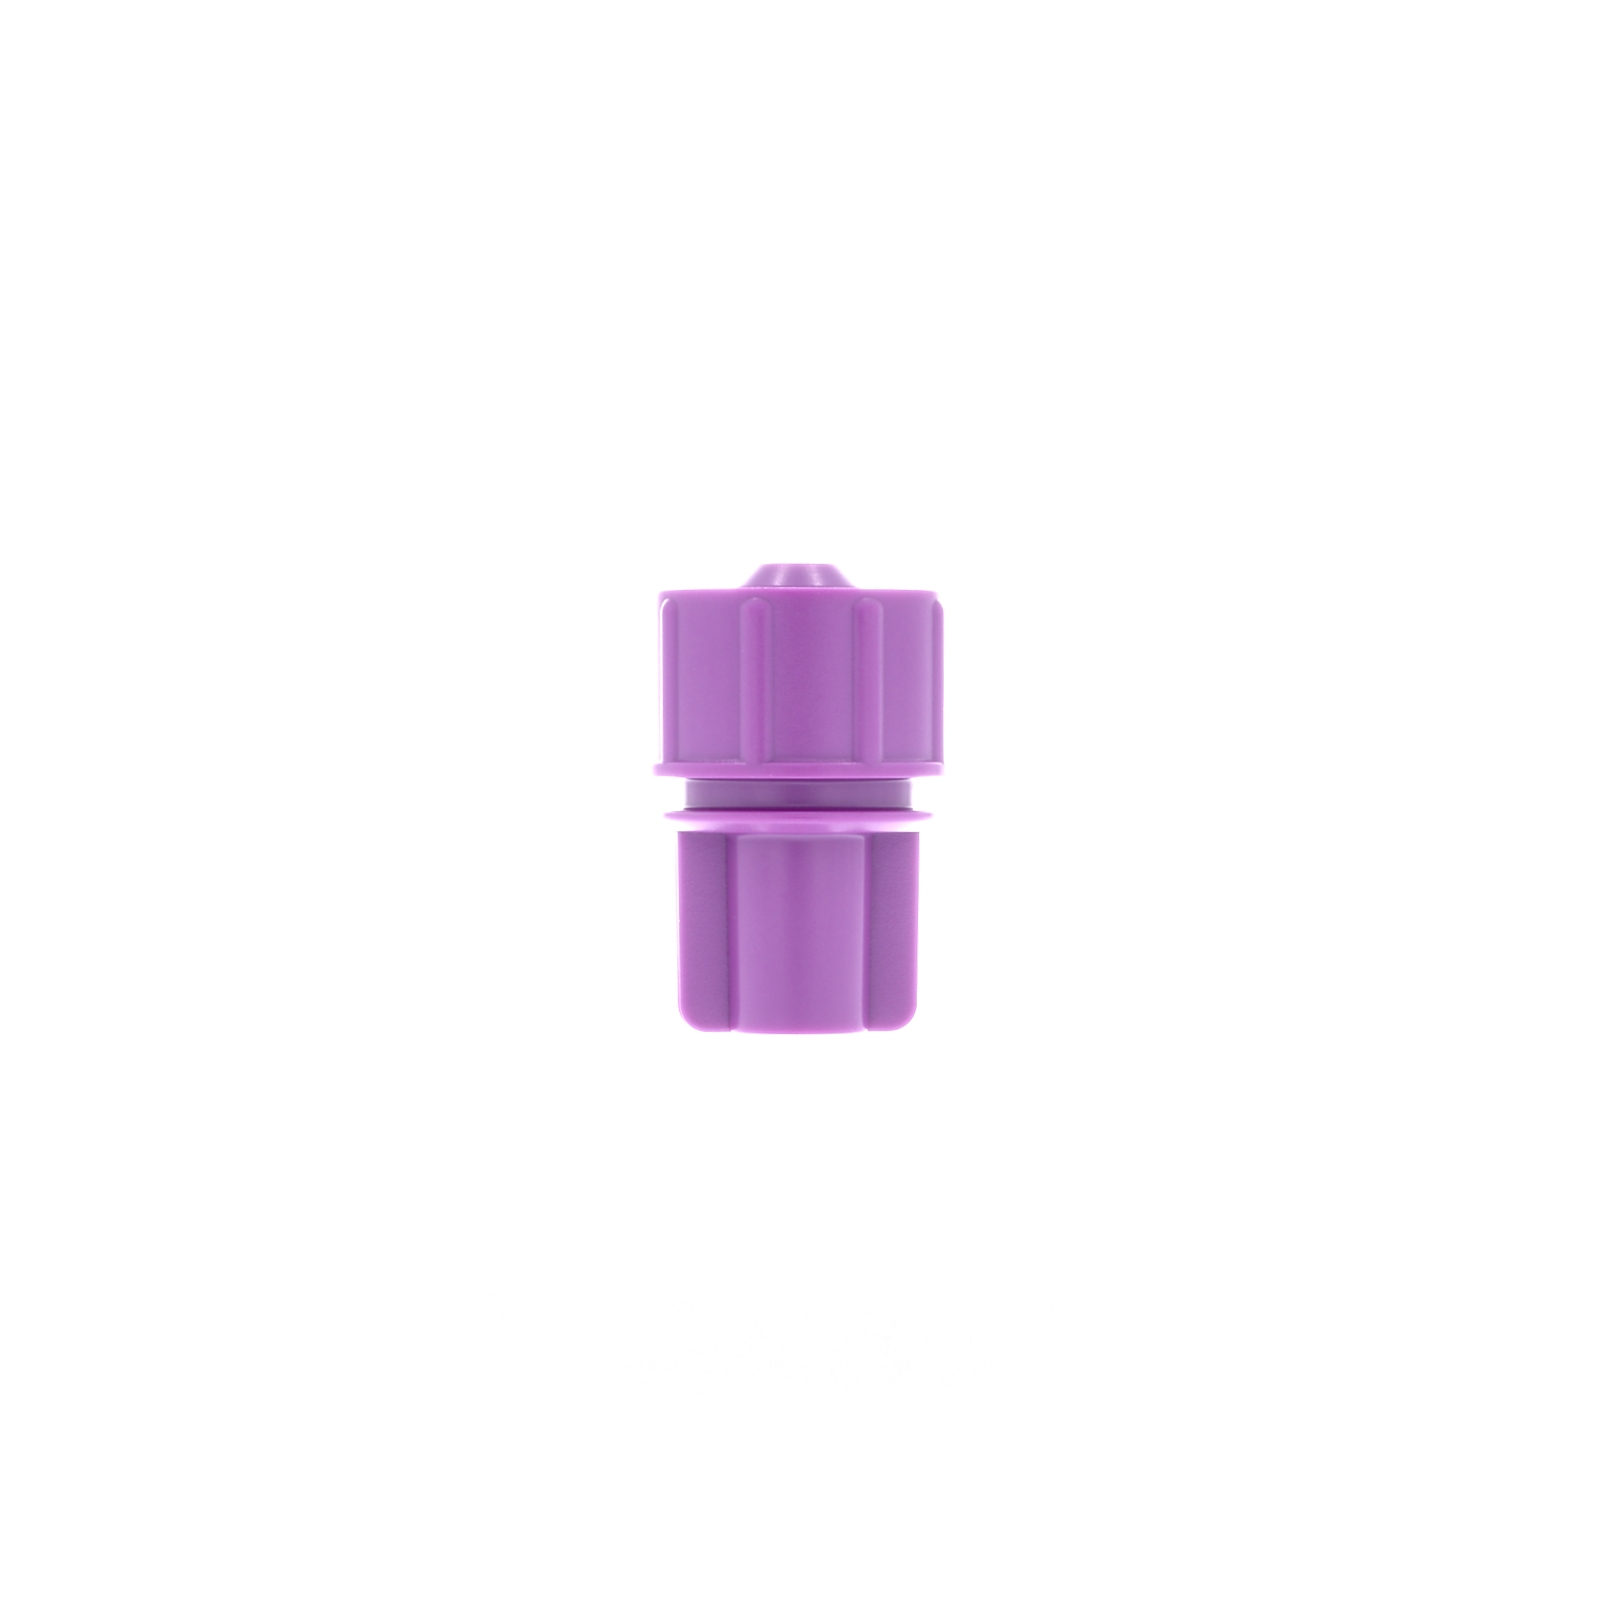 muroplas purple ENFit® connector with cap